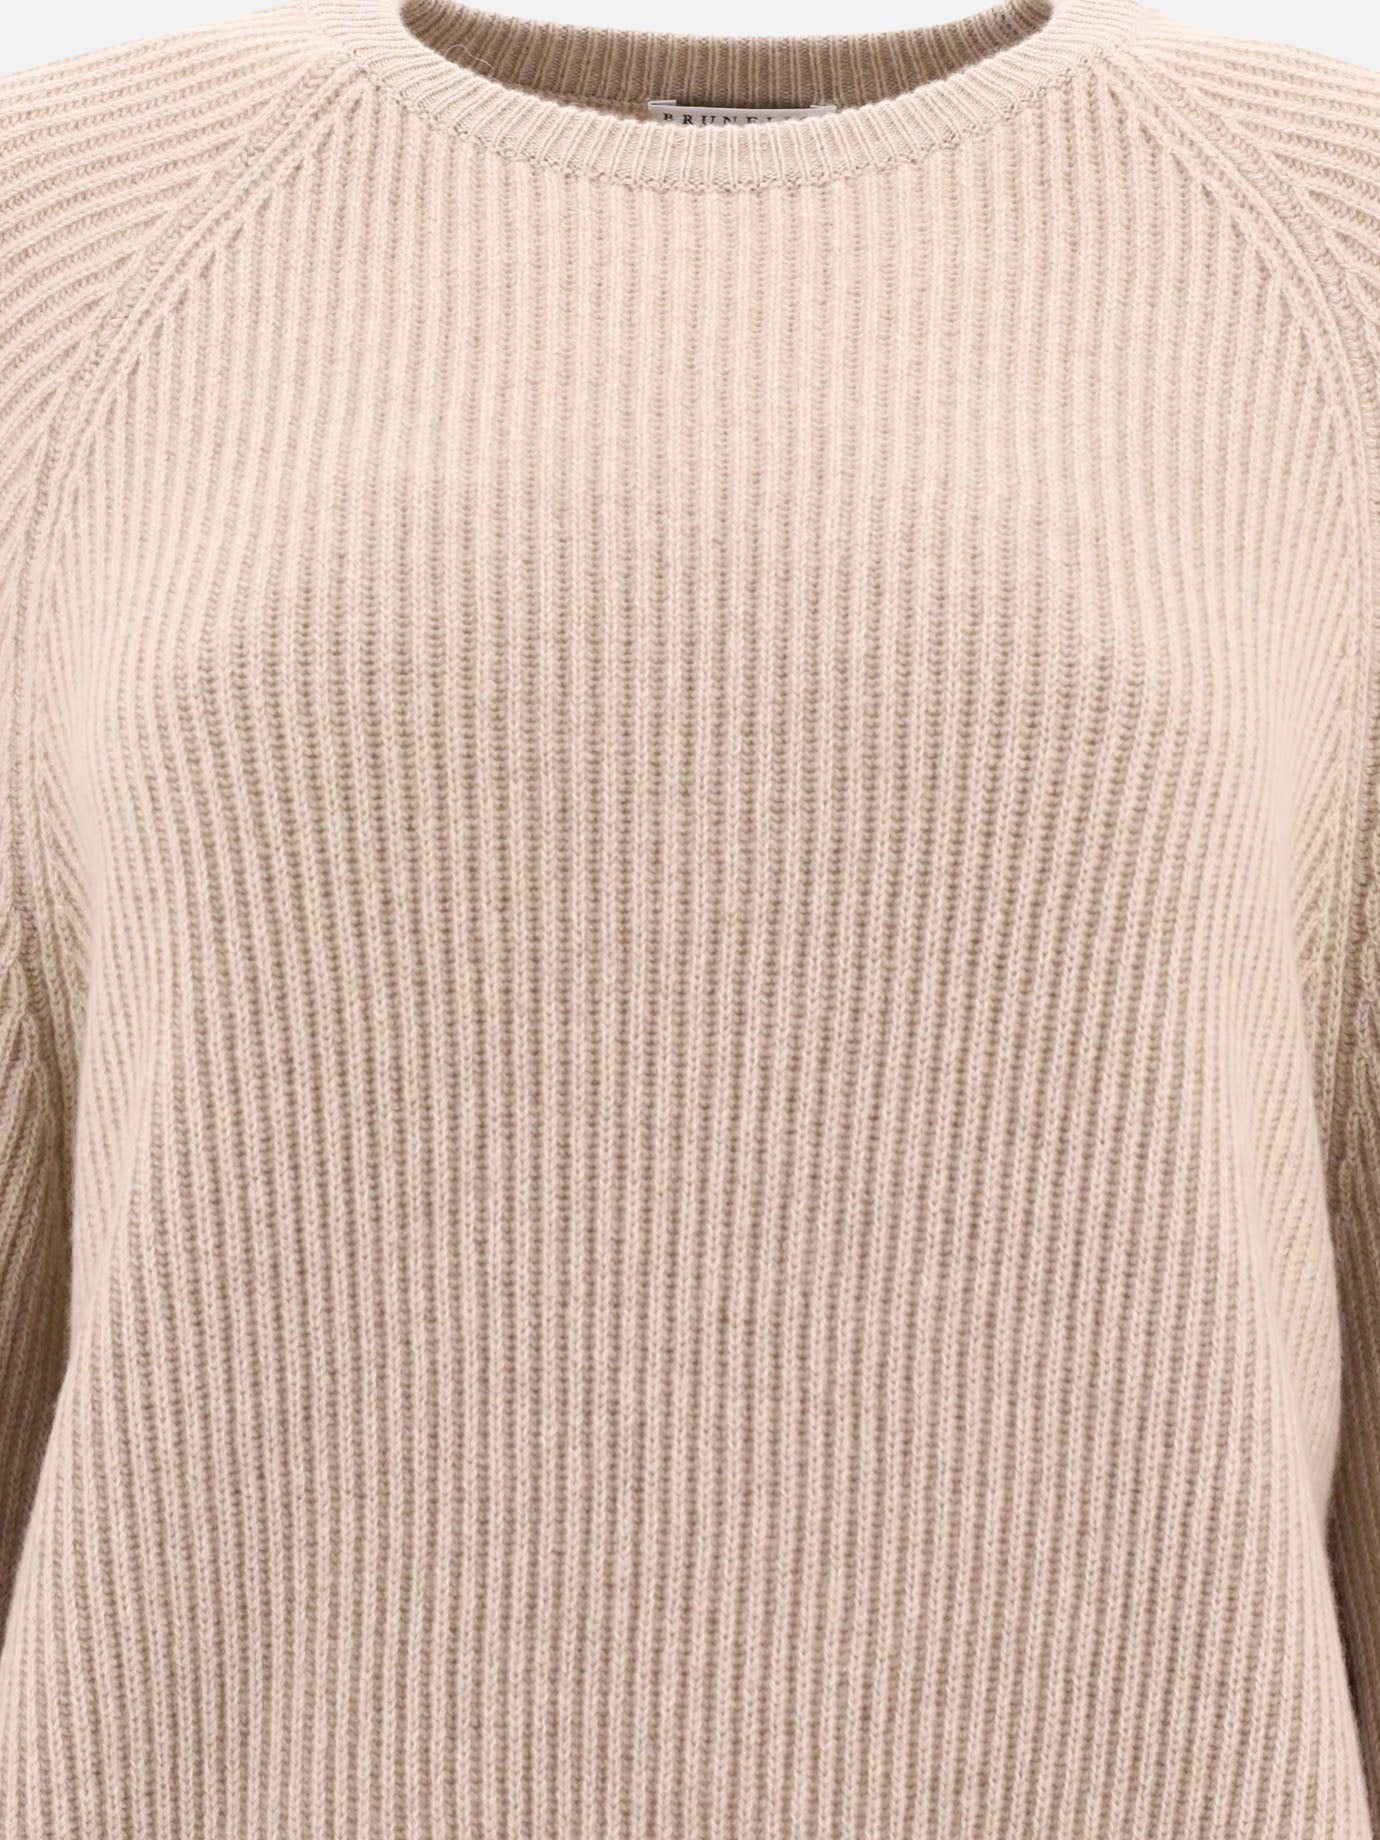 English rib sweater with dazzling net cuffs